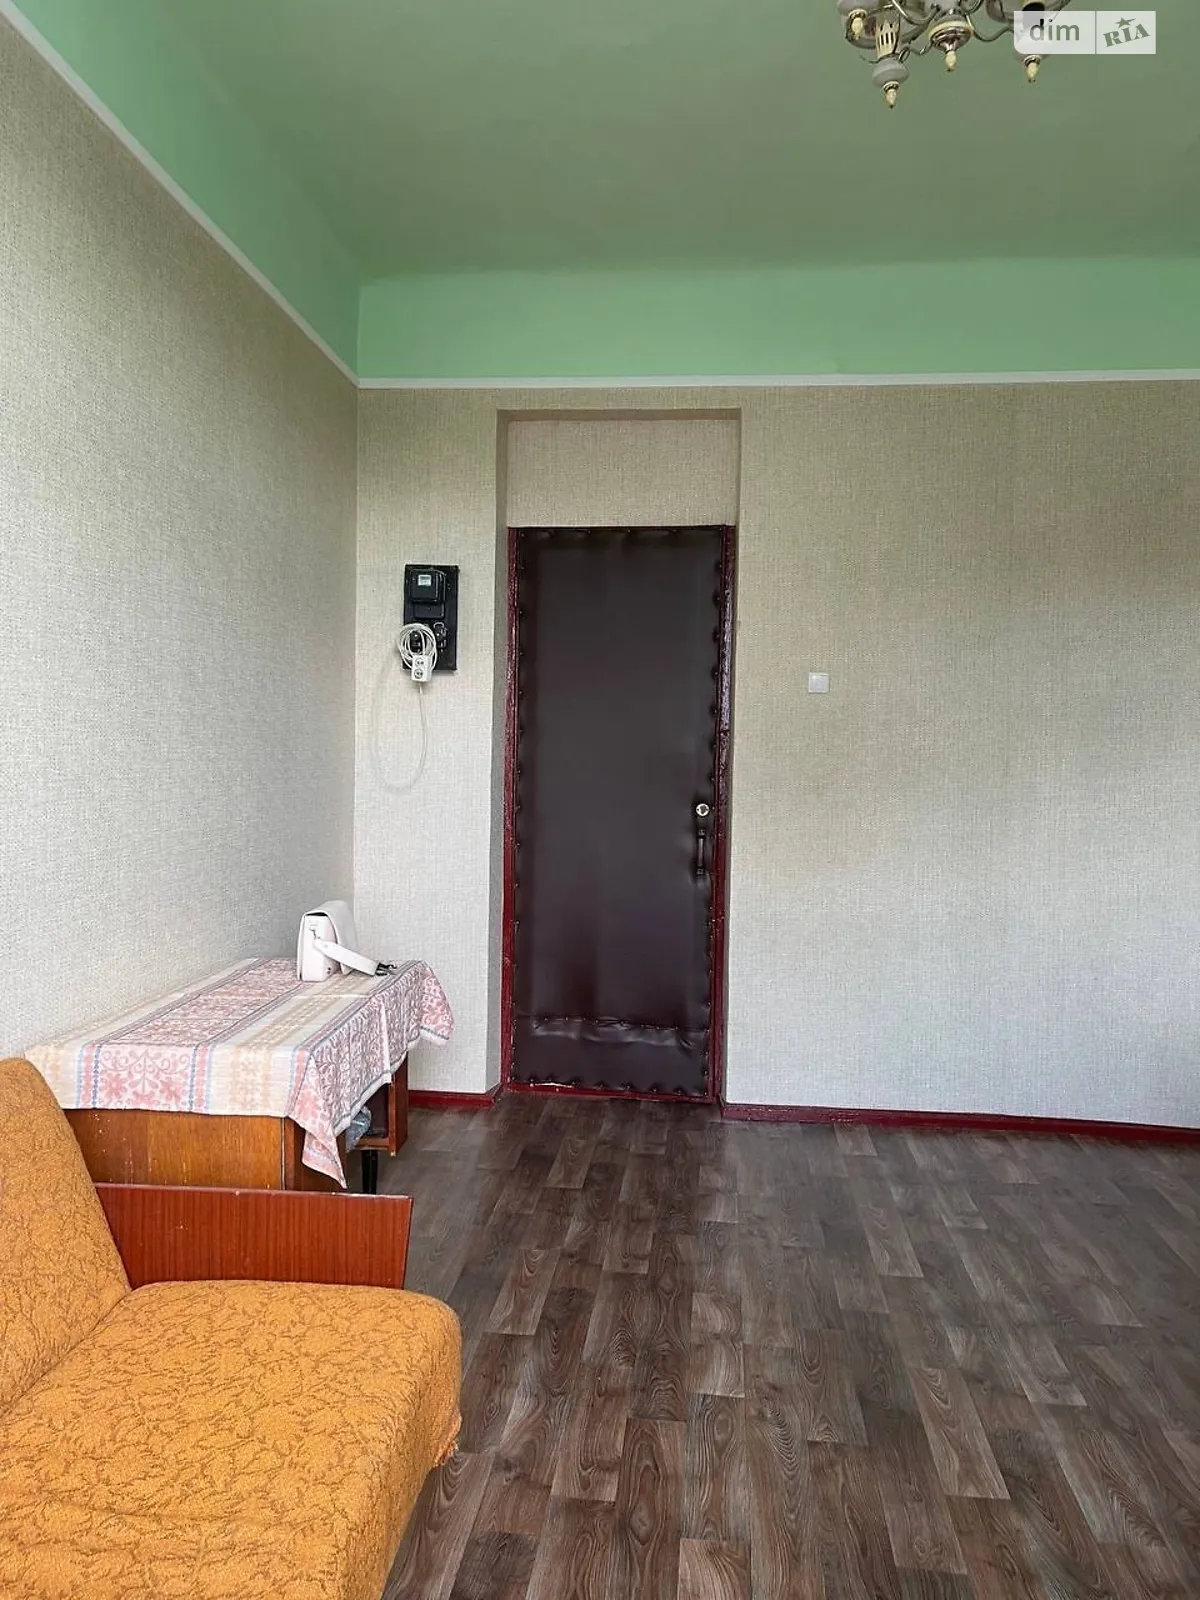 Продается комната 27 кв. м в Харькове - фото 3